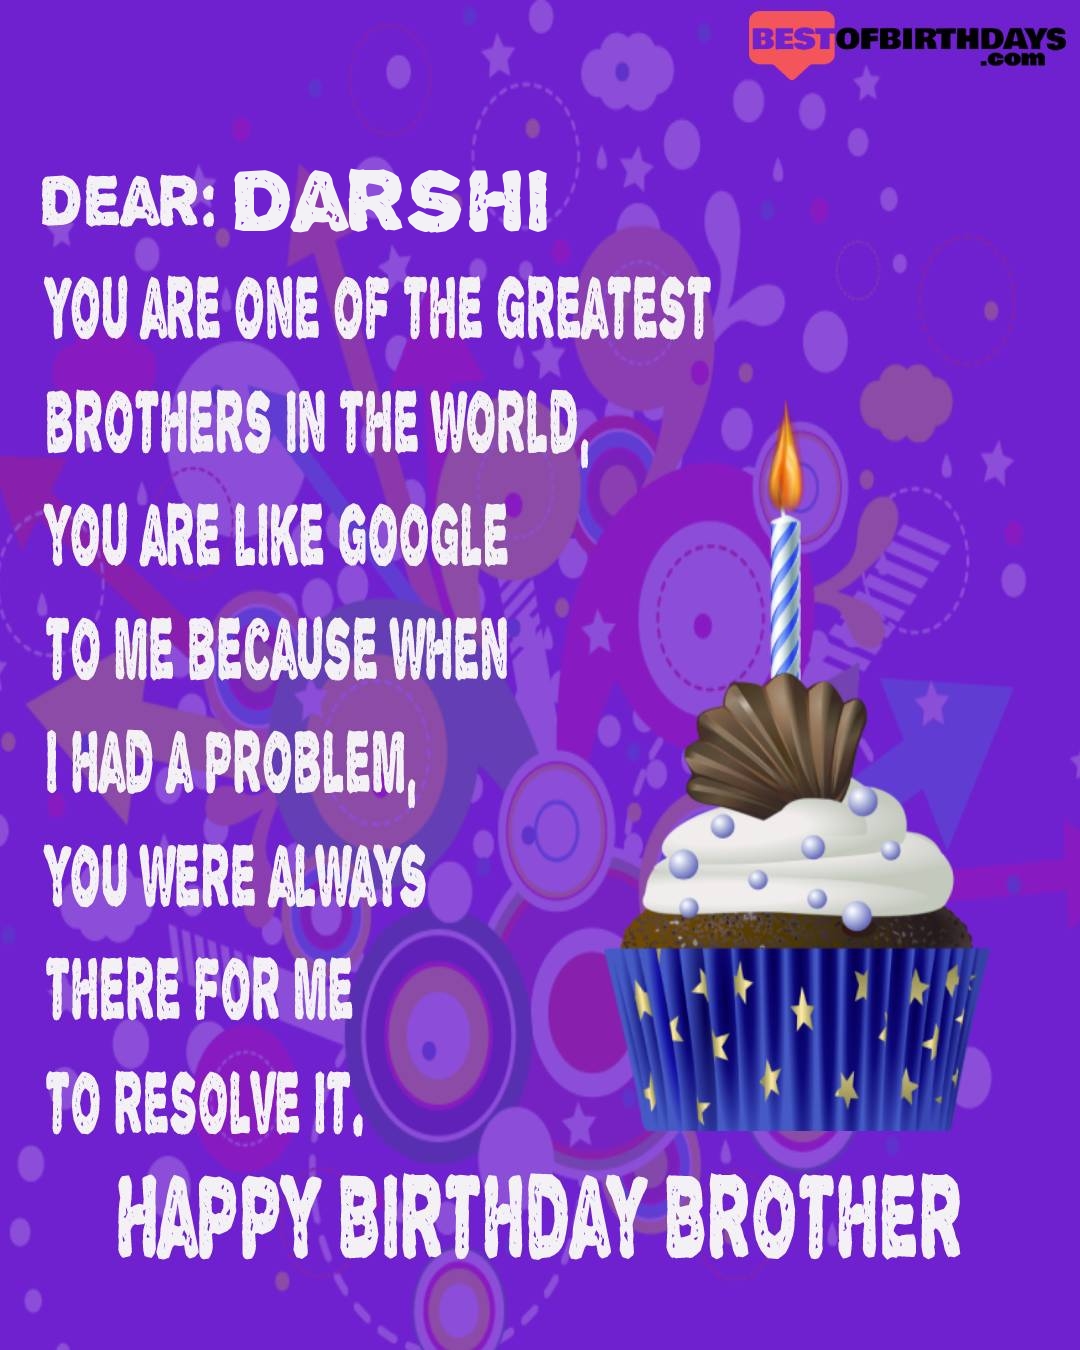 Happy birthday darshi bhai brother bro